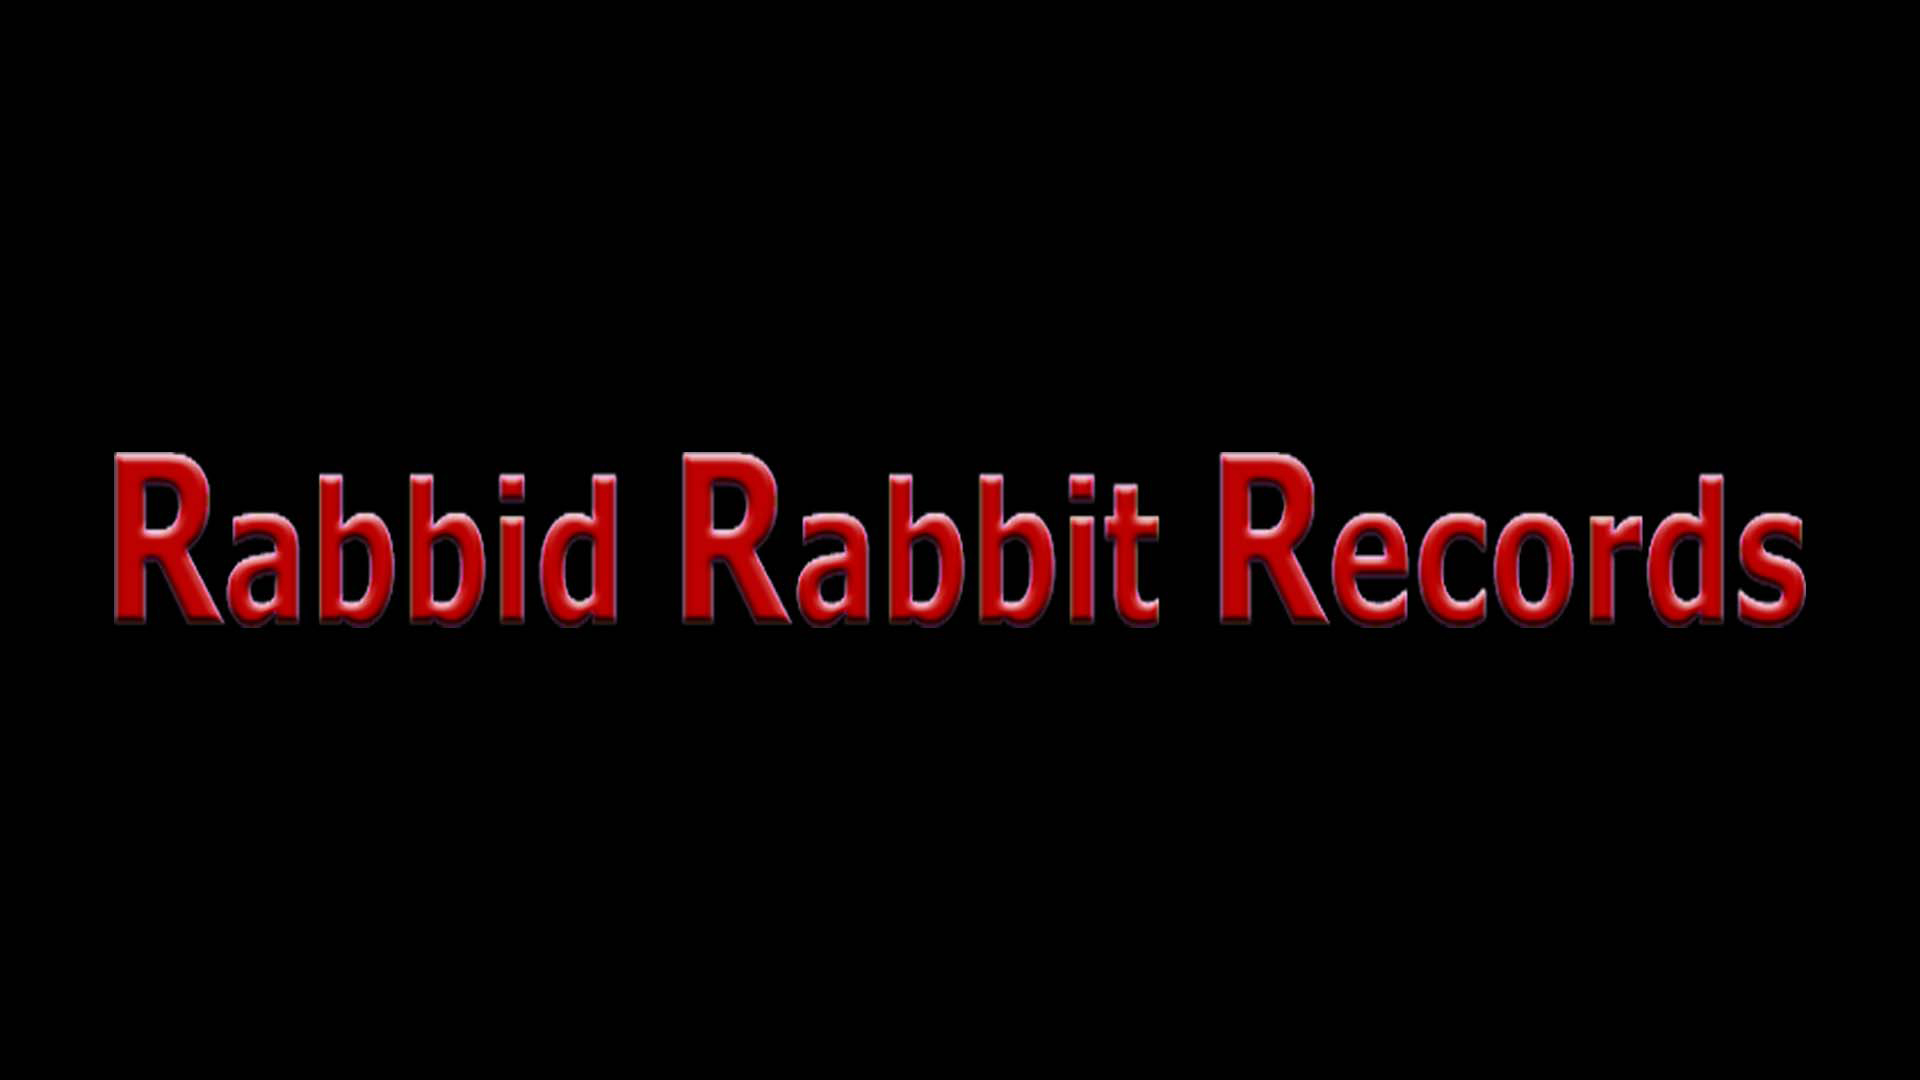 Rabbid Rabbit Records Golden Grain Announcement